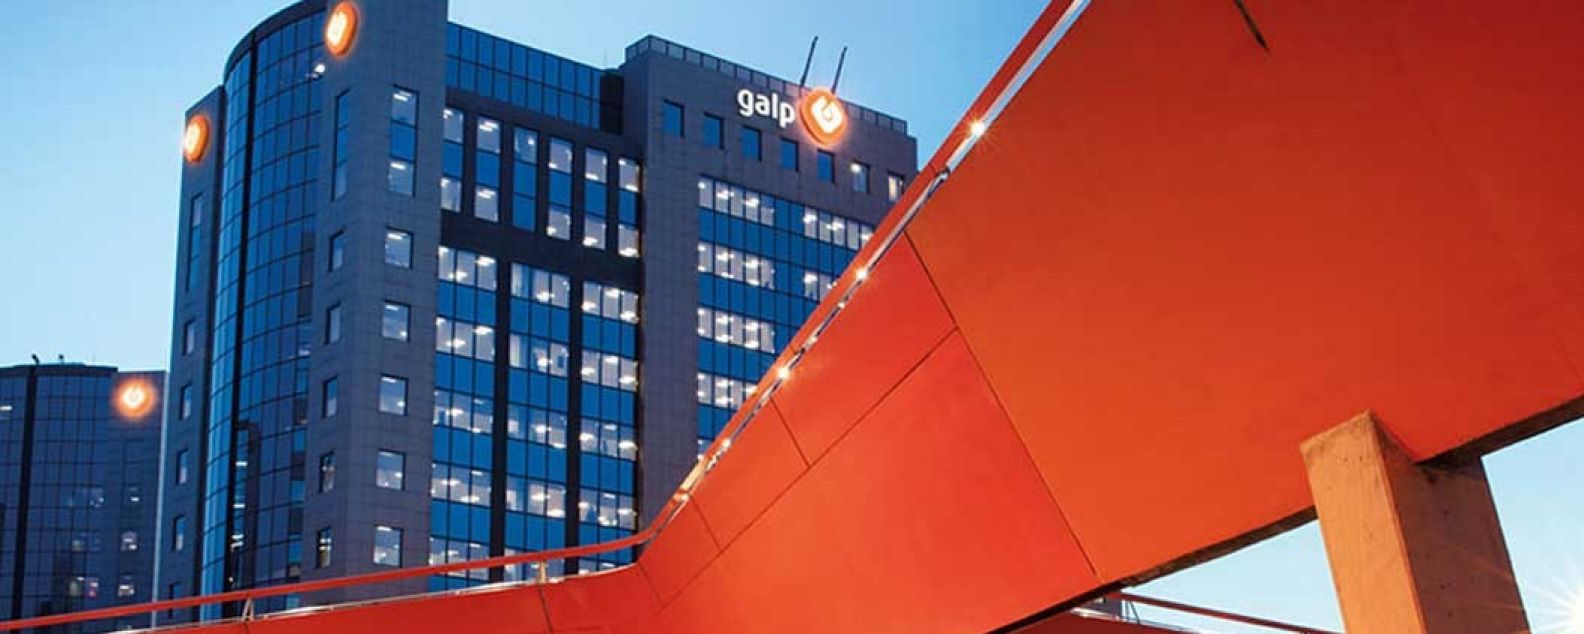 photo of Galp Energia building 